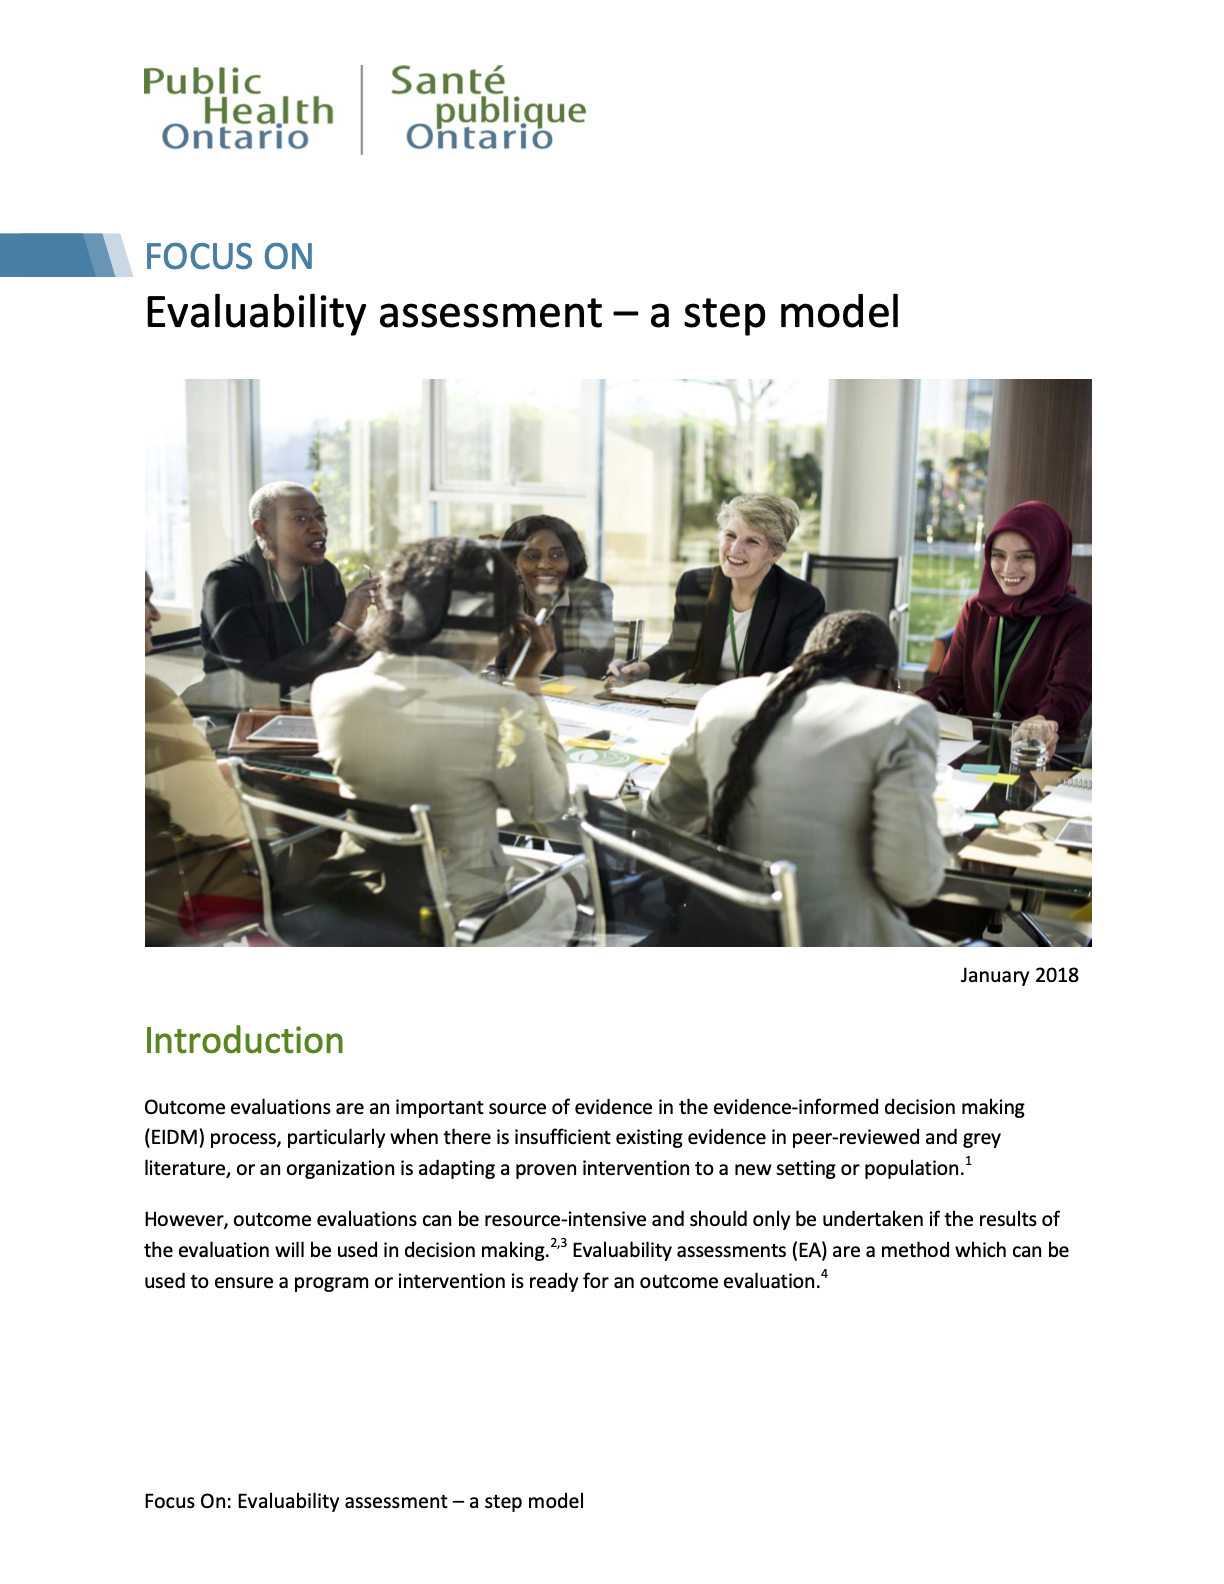 Evaluability Assessment: A Step Model